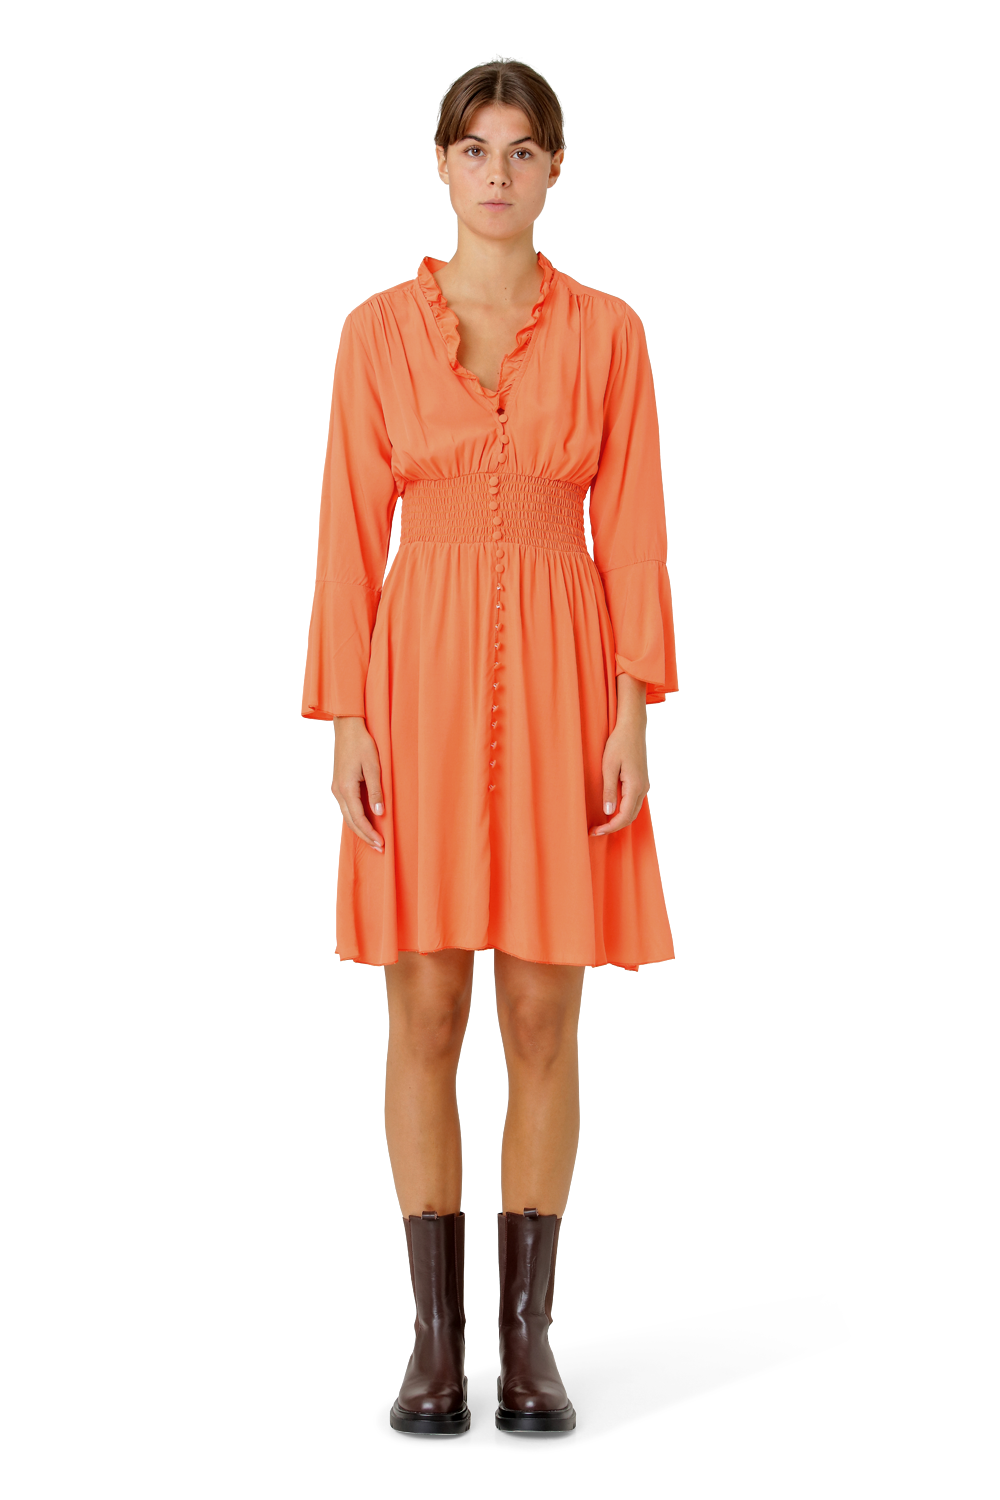 Sally Short Dress Burnt Orange Solid